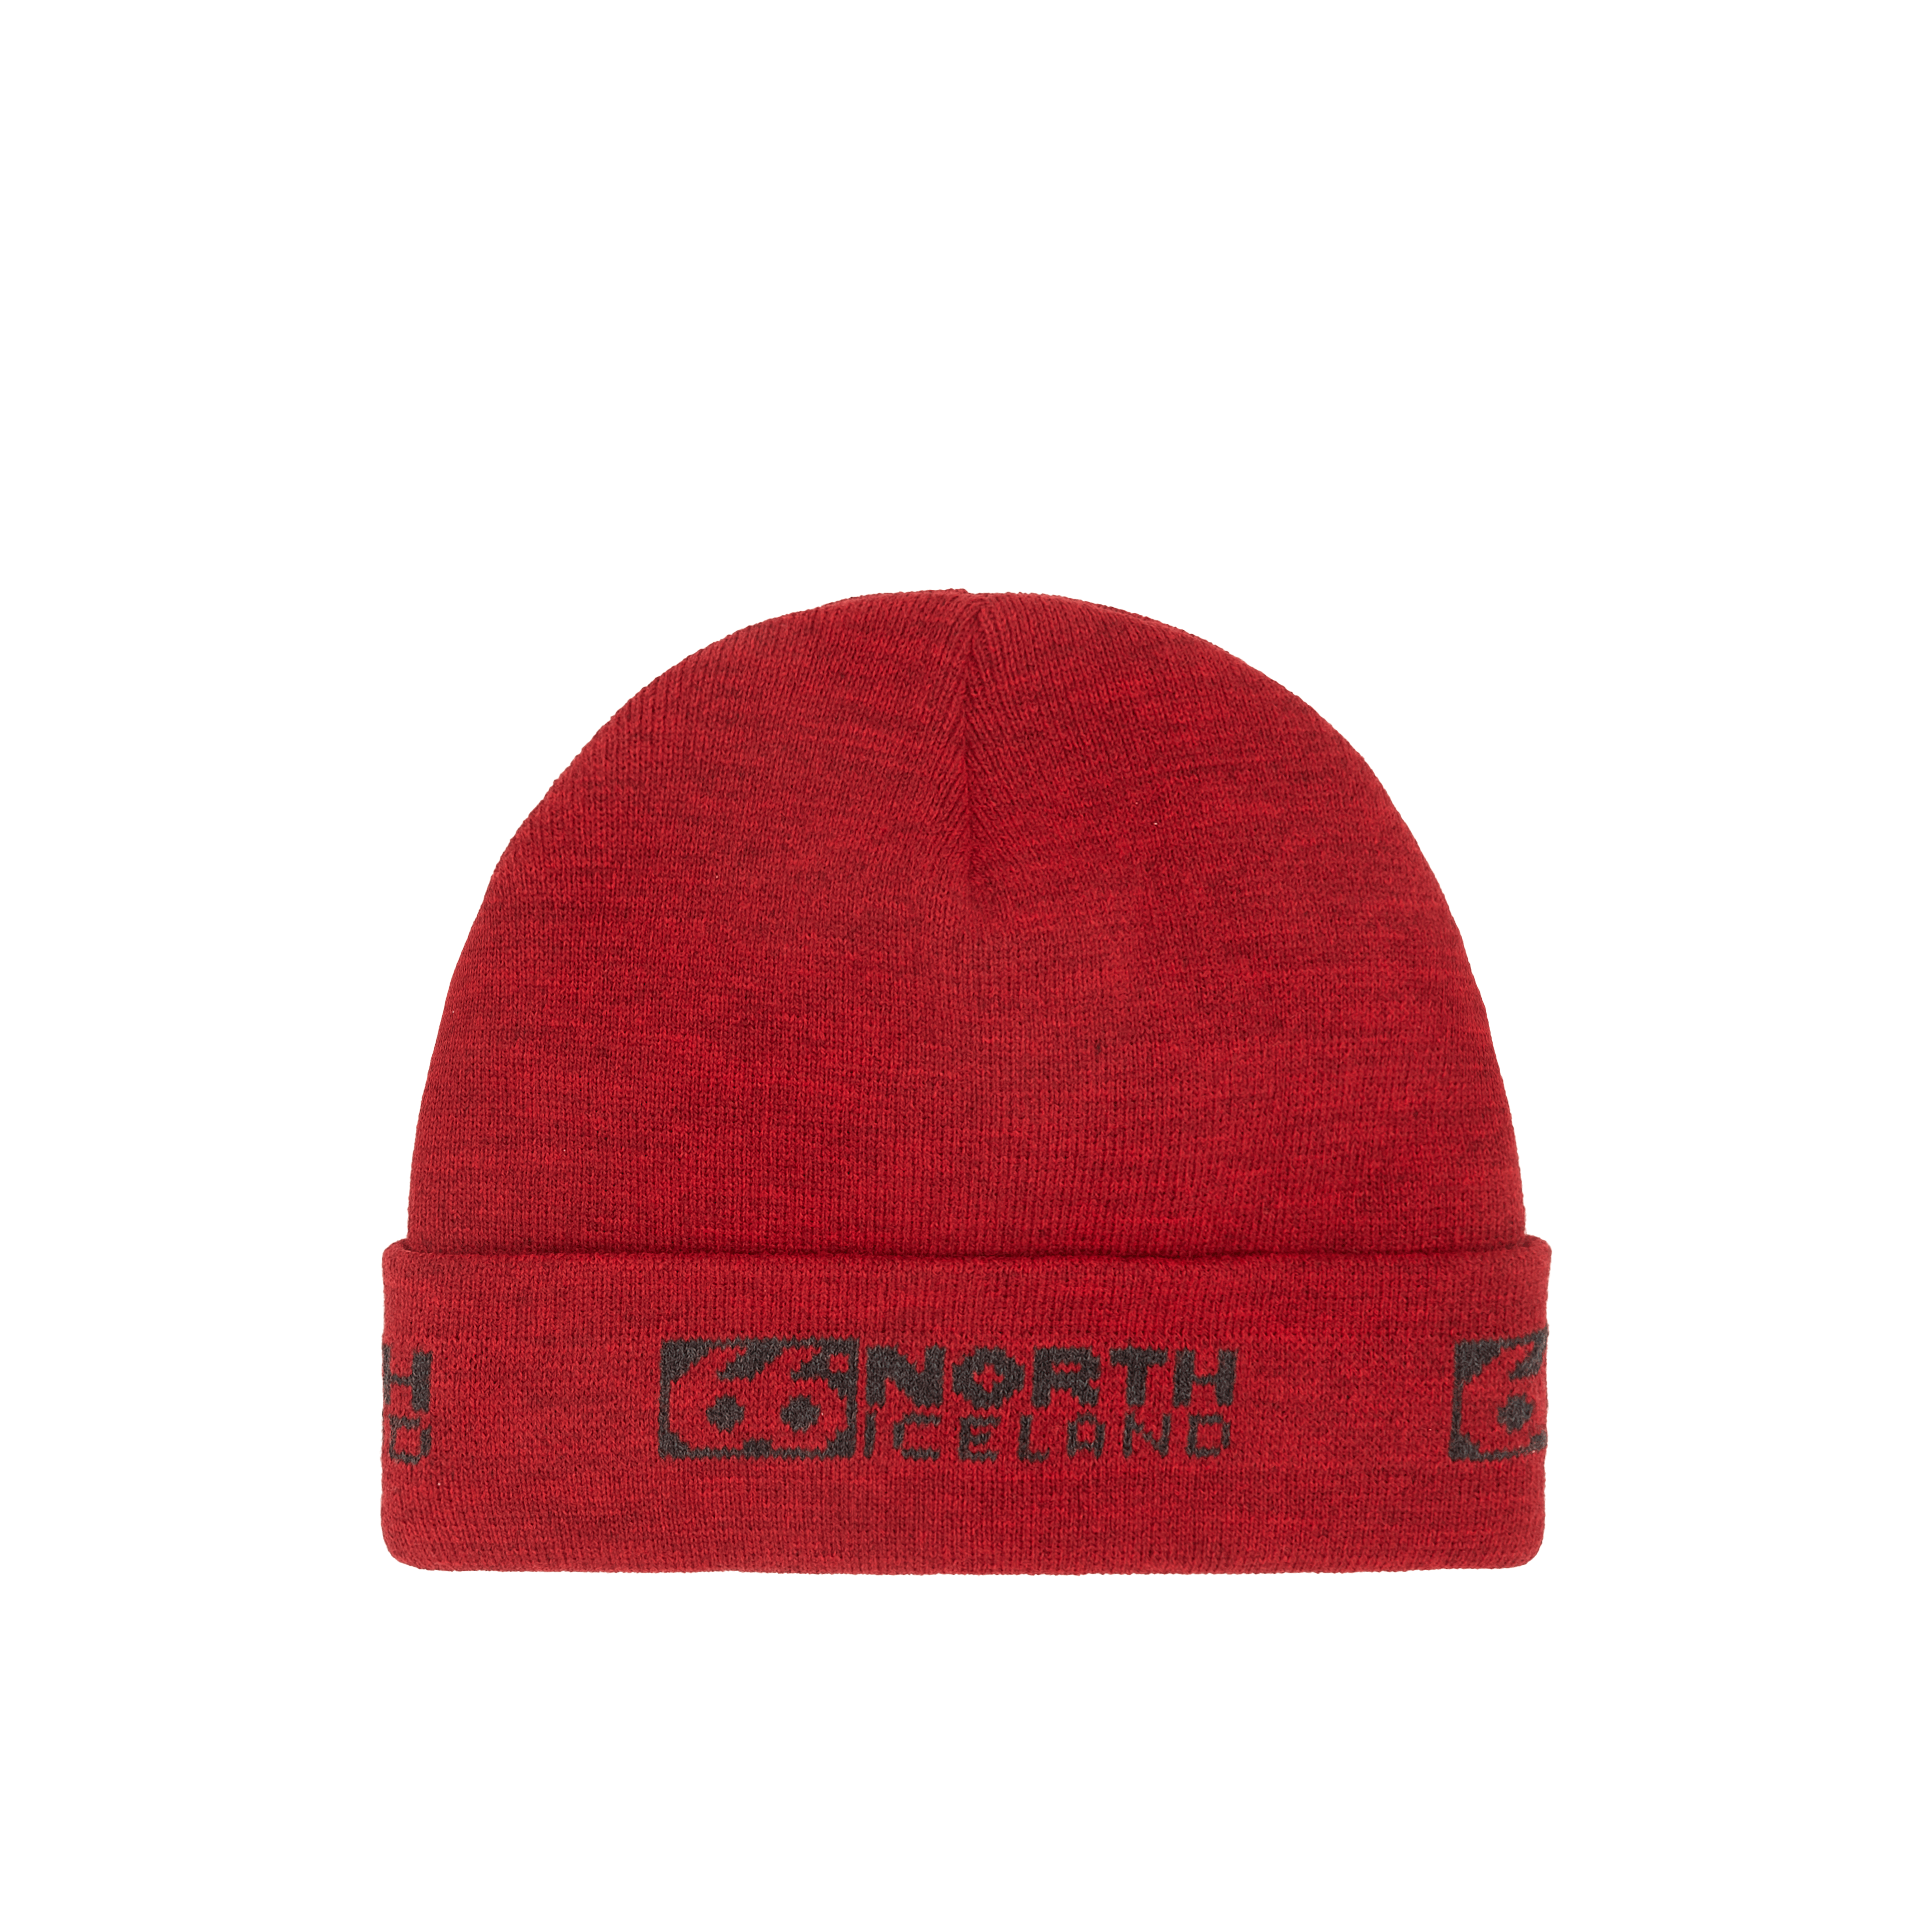 66 North Women's Workman Hat Accessories In Red